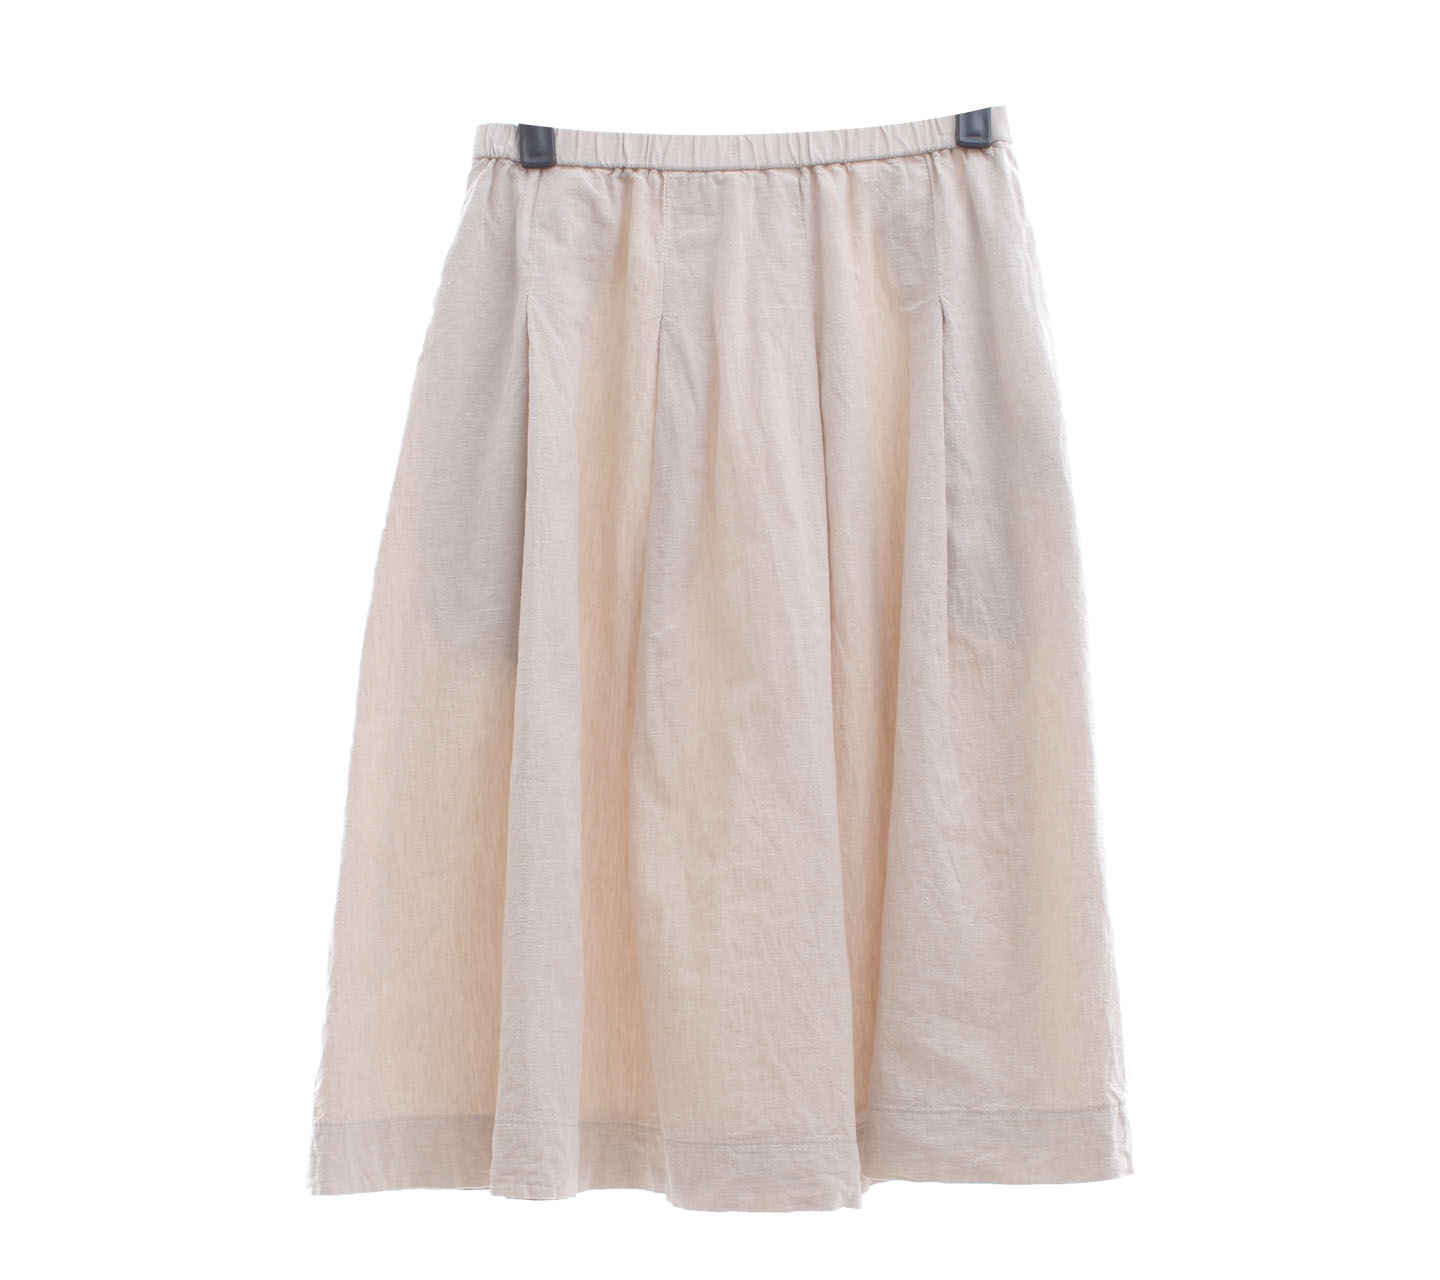 Uniqlo Cream Mini Skirt